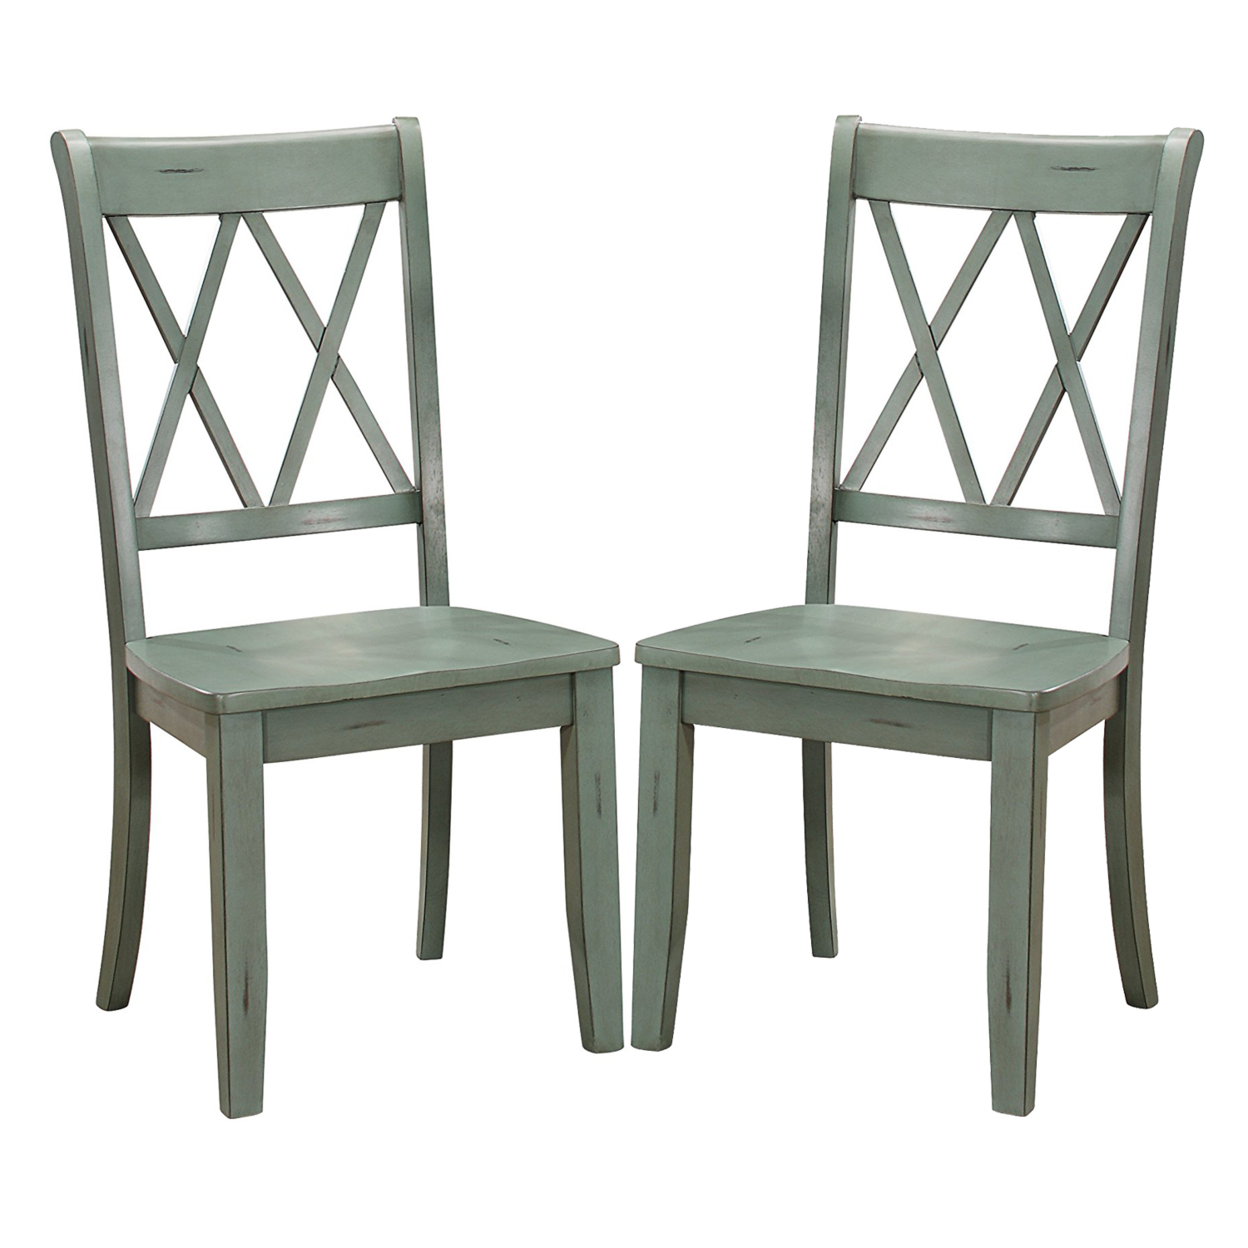 Pine Veneer Side Chair With Double X Cross Back, Teal Blue, Set Of 2- Saltoro Sherpi